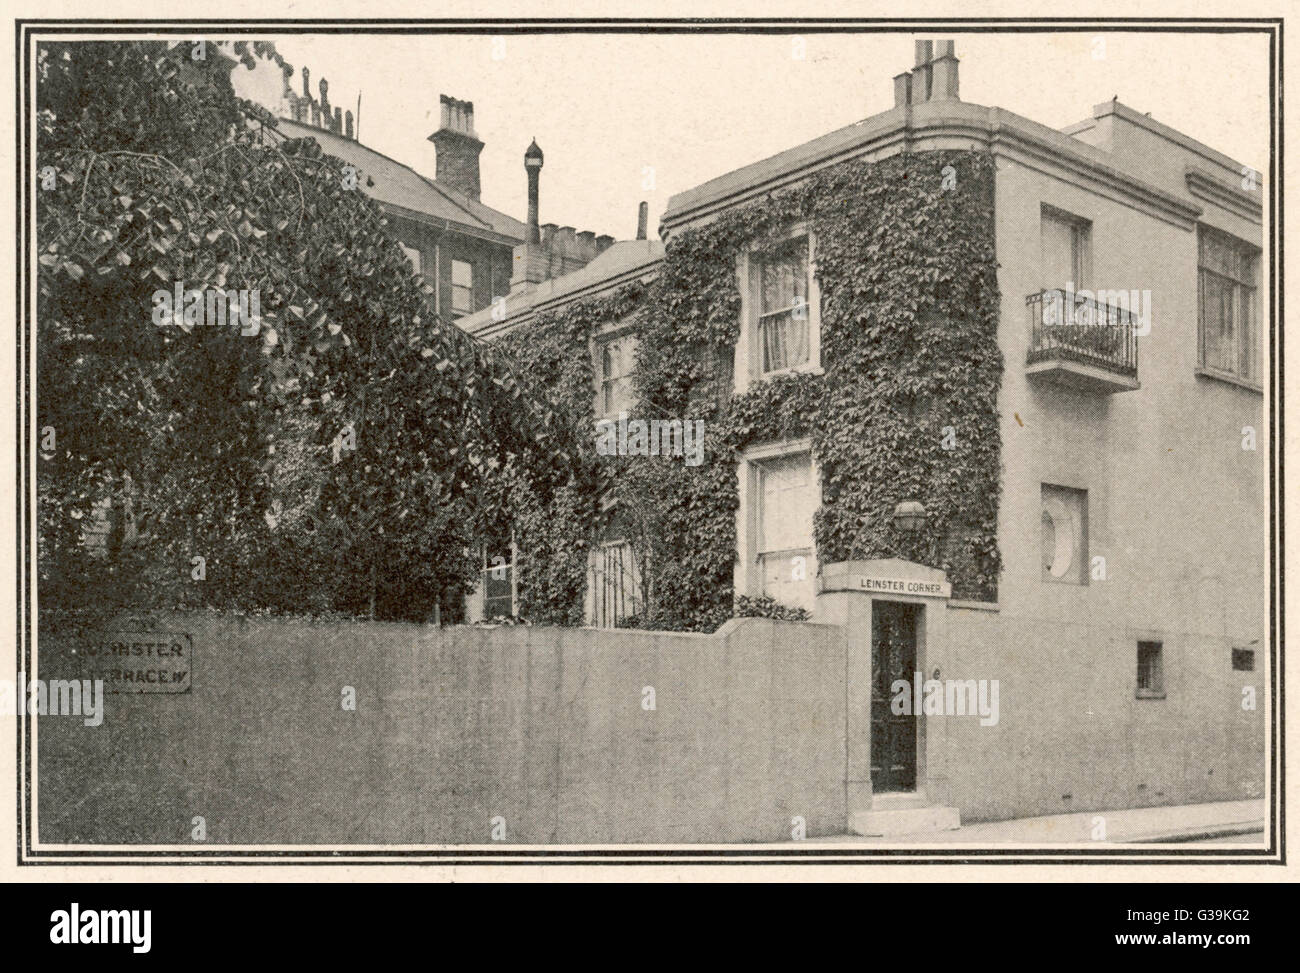 Sir James Matthew Barrie's home, Kensington Park, England Stock Photo